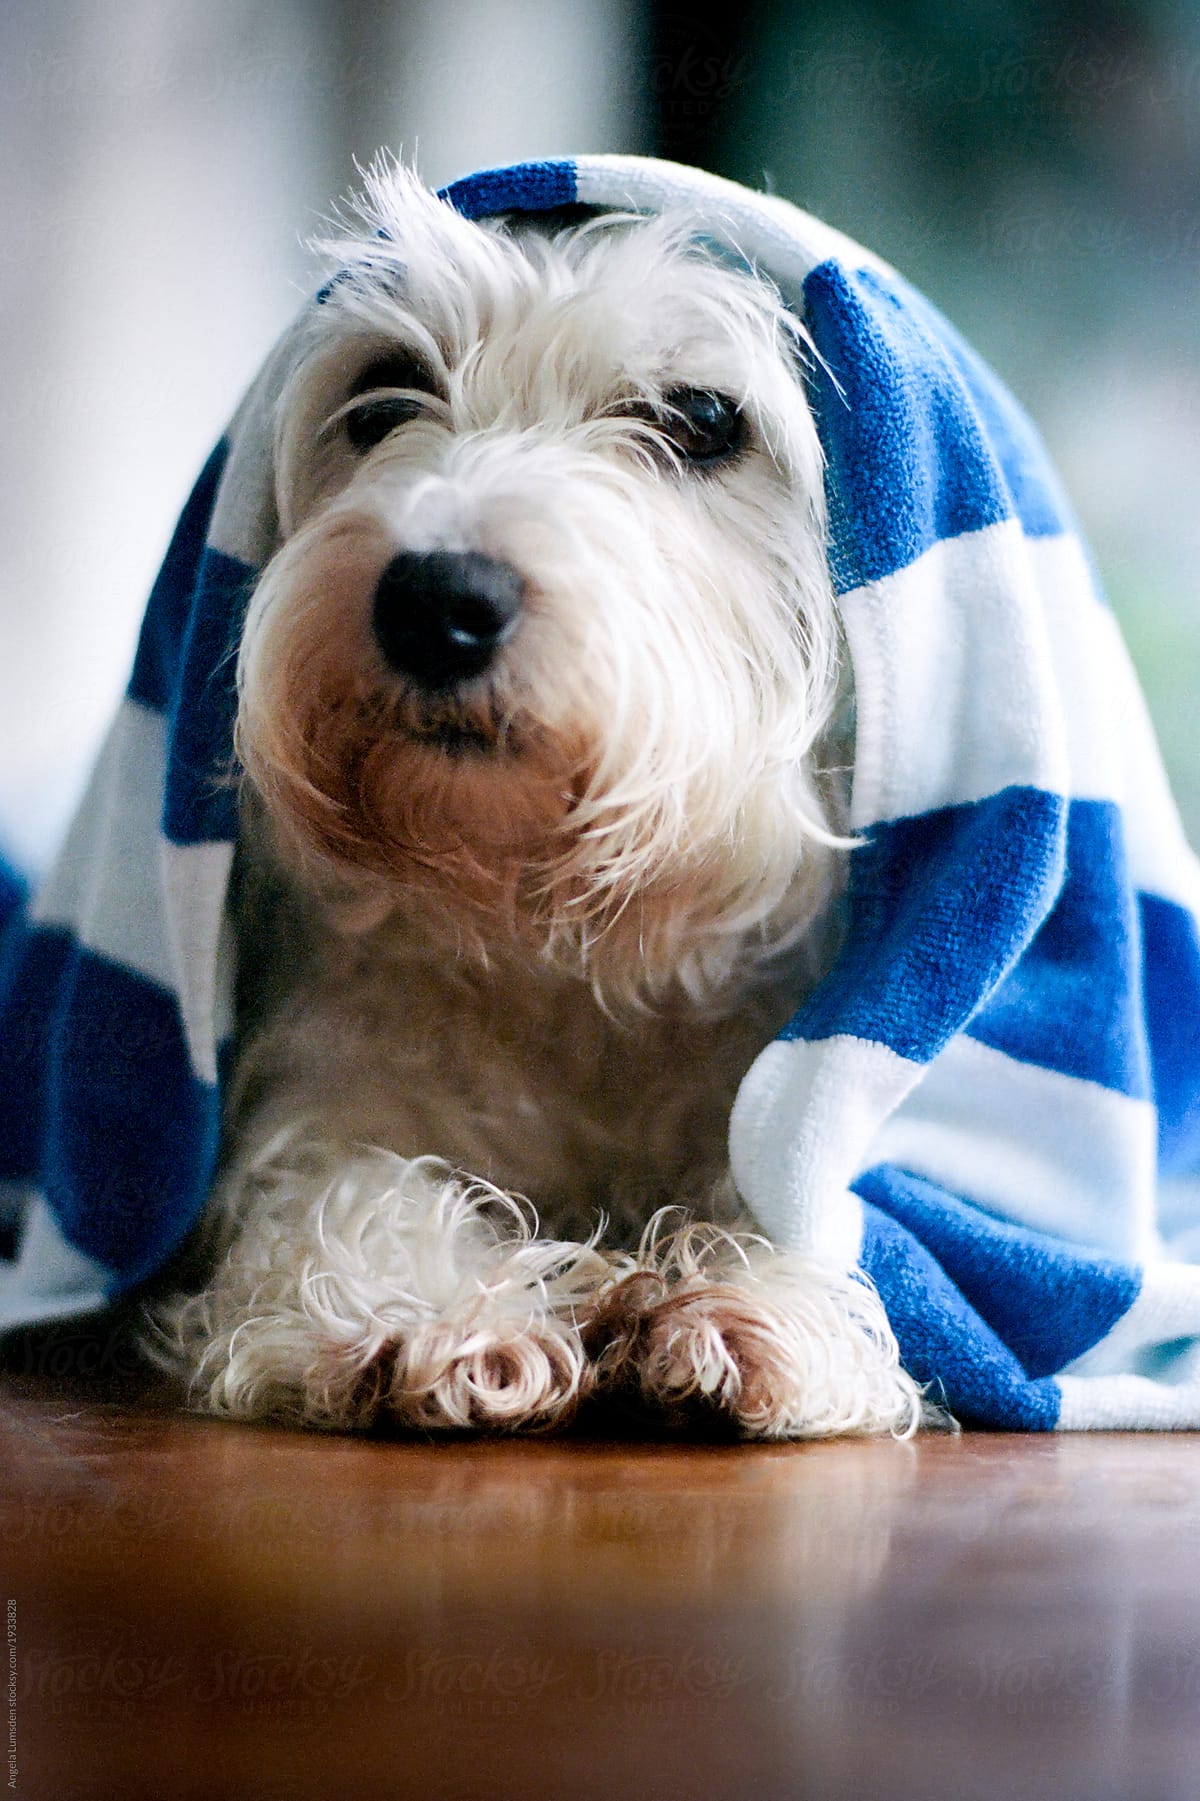 wet towel for dog